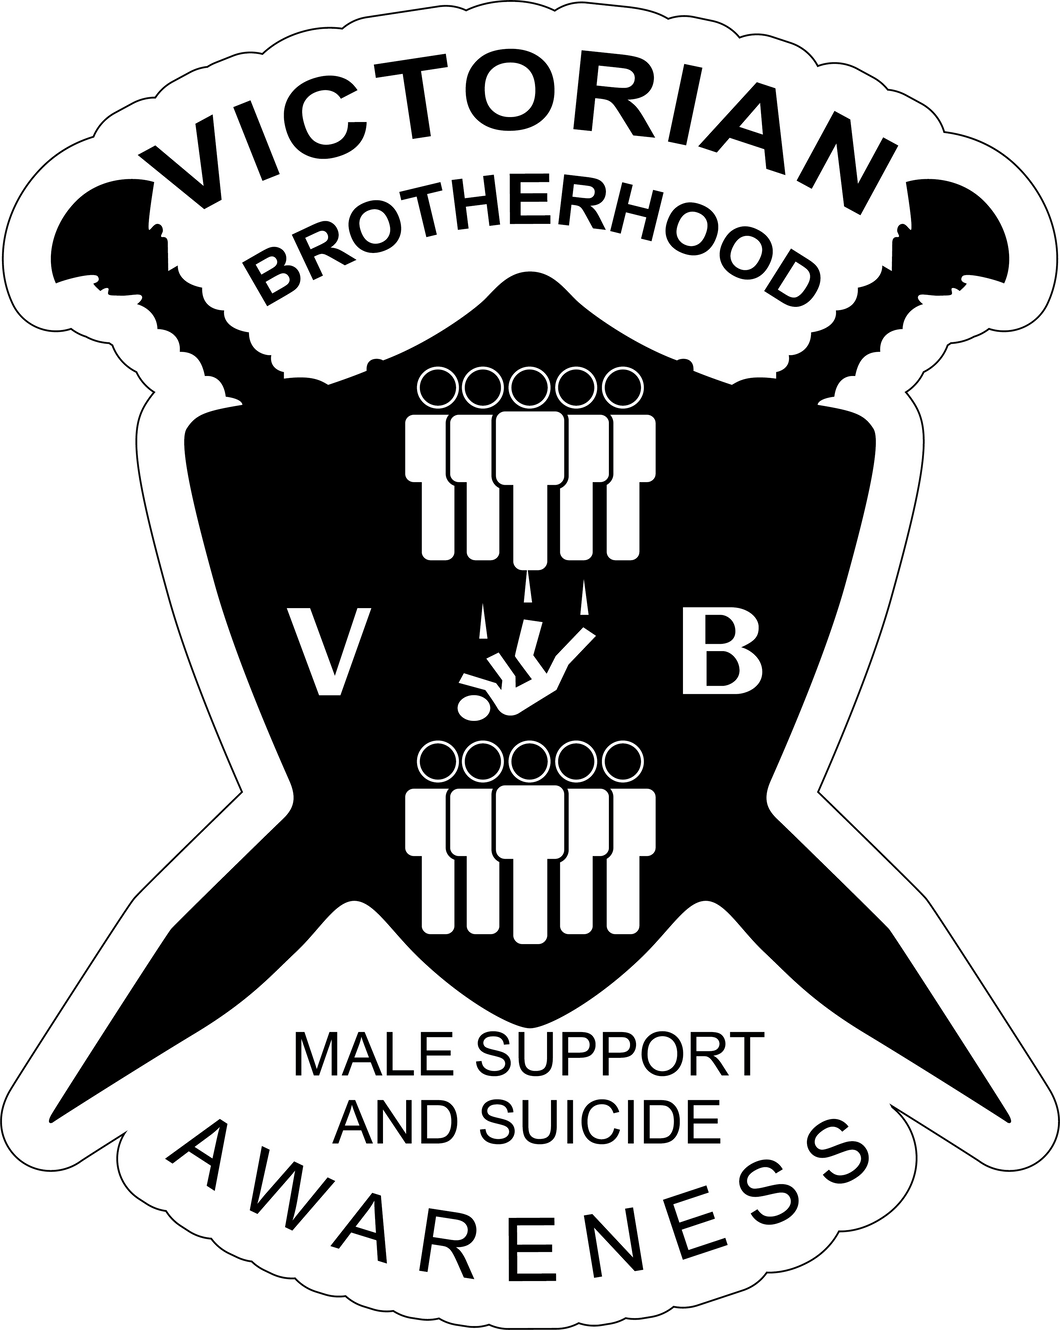 Victorian Brotherhood Logo Sticker